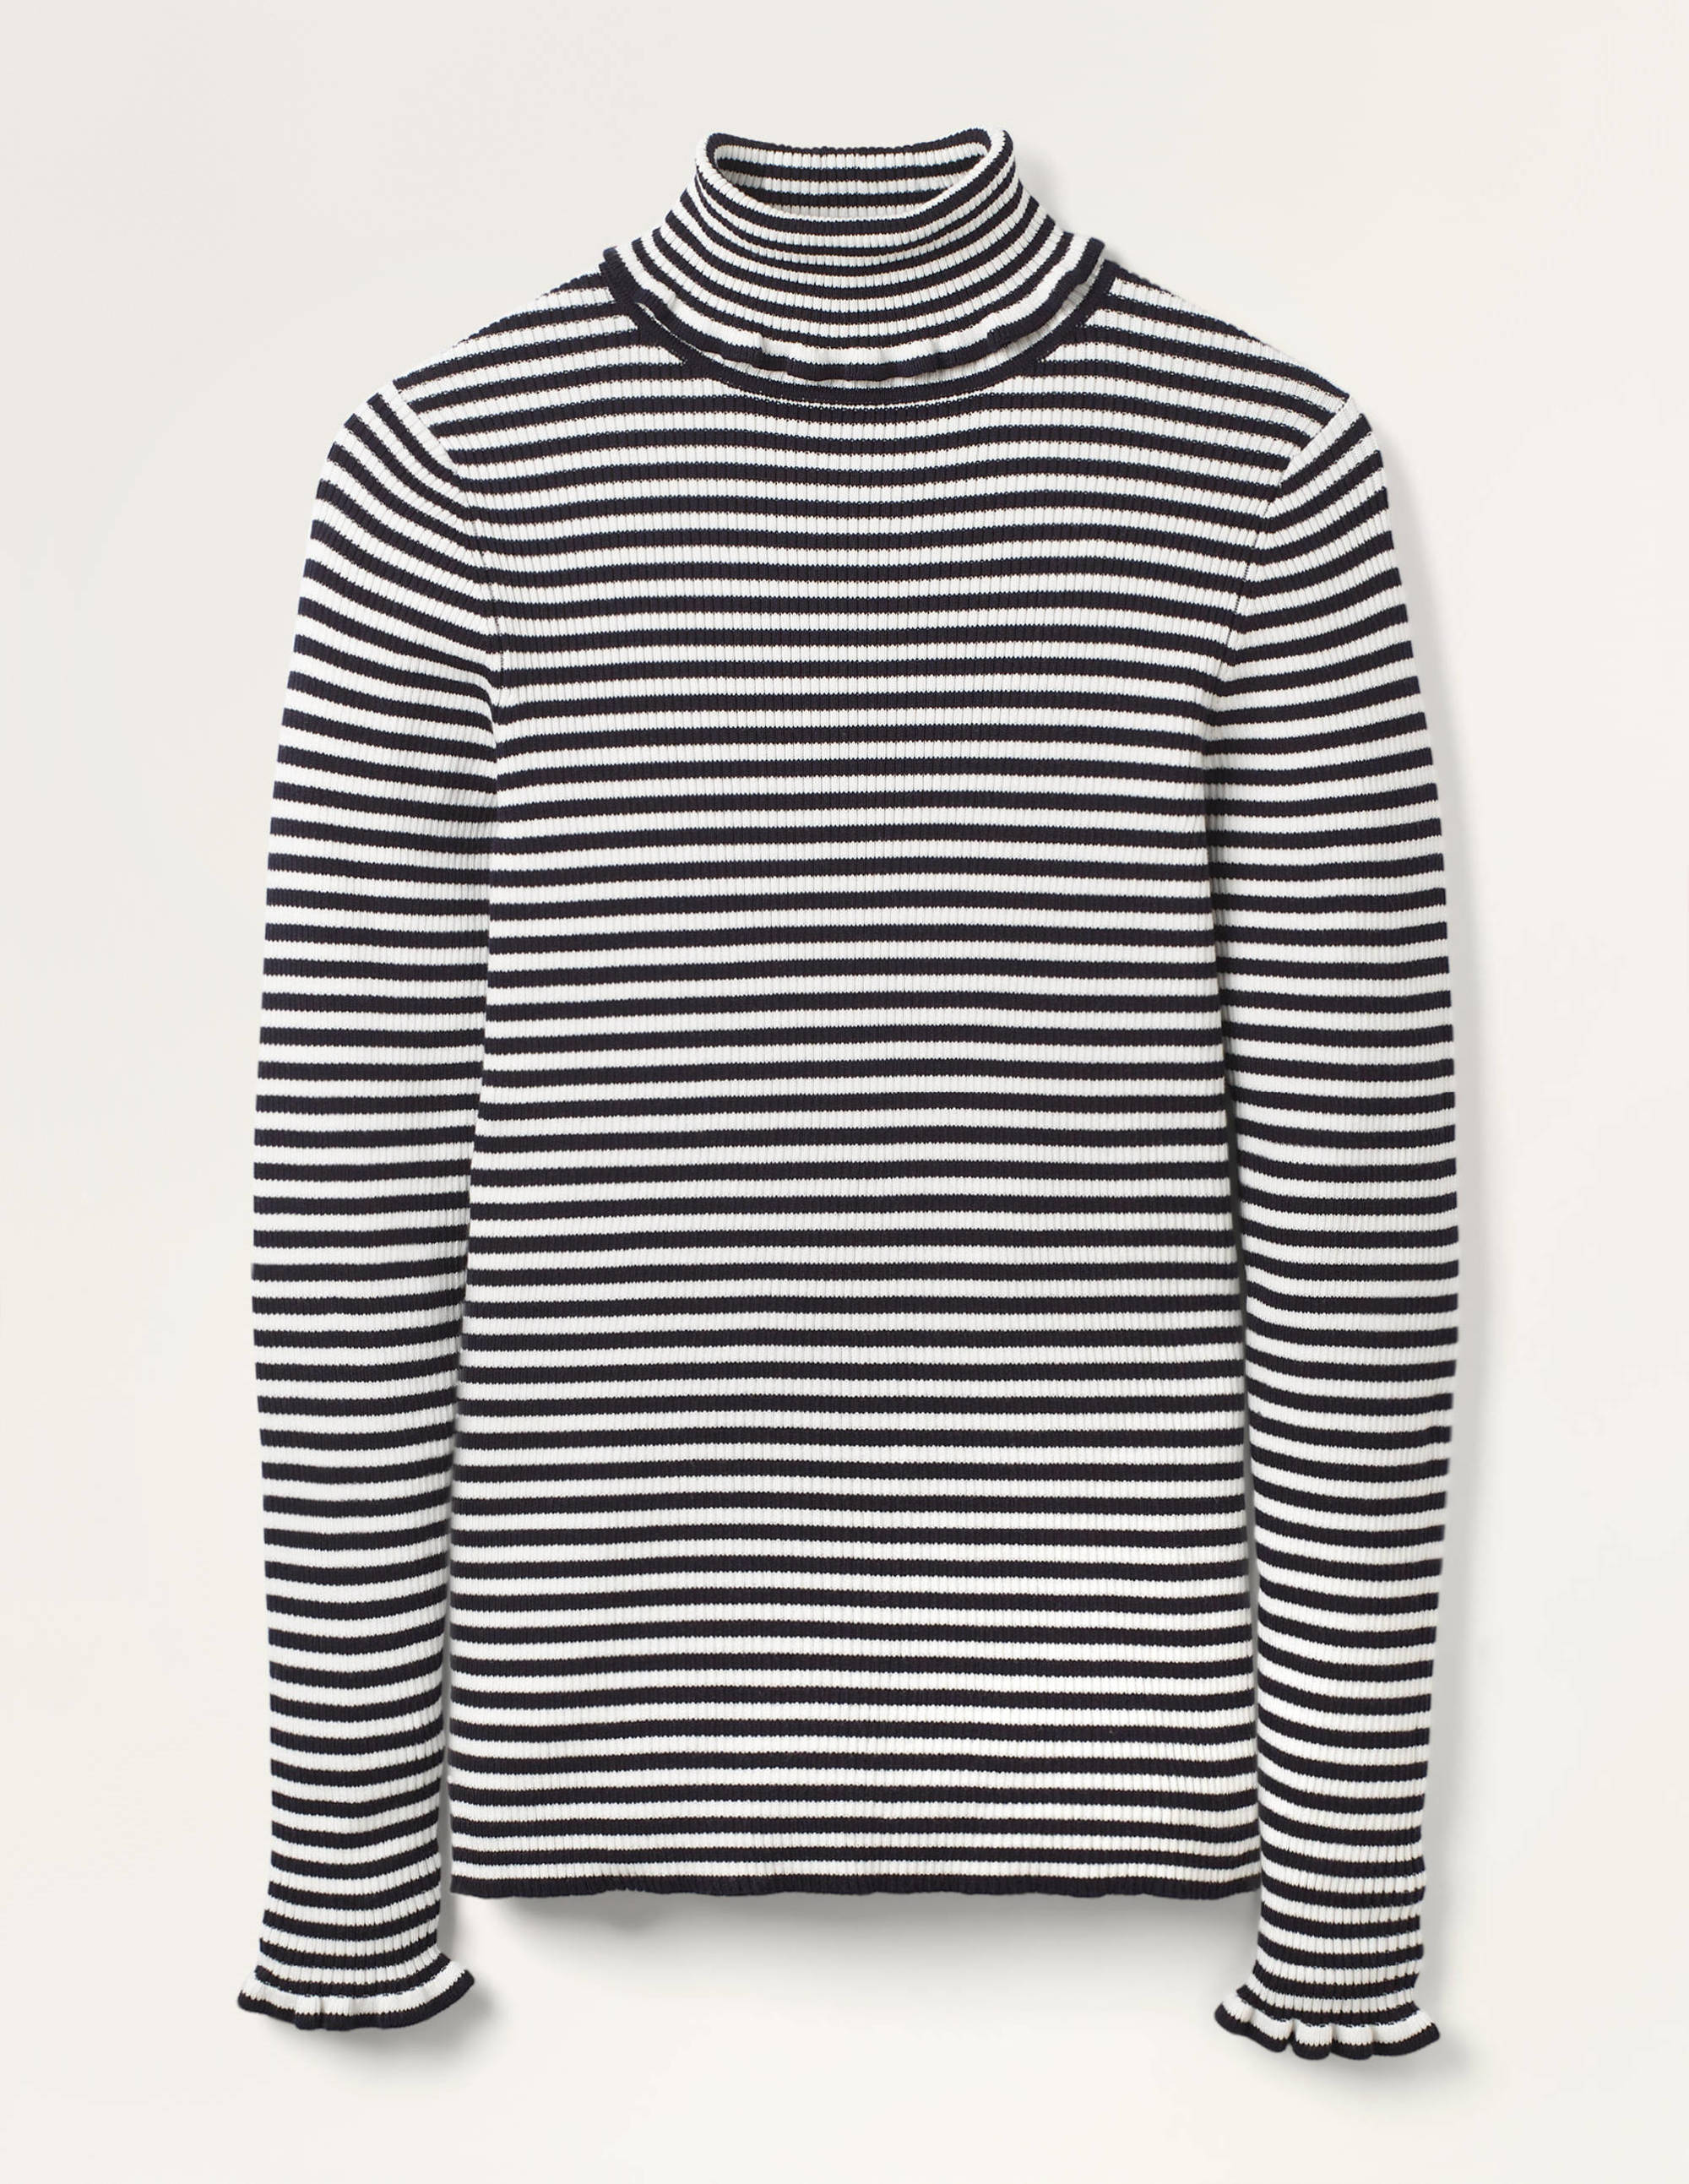 Frill Roll Neck Sweater - Navy, Ivory Stripe | Boden US